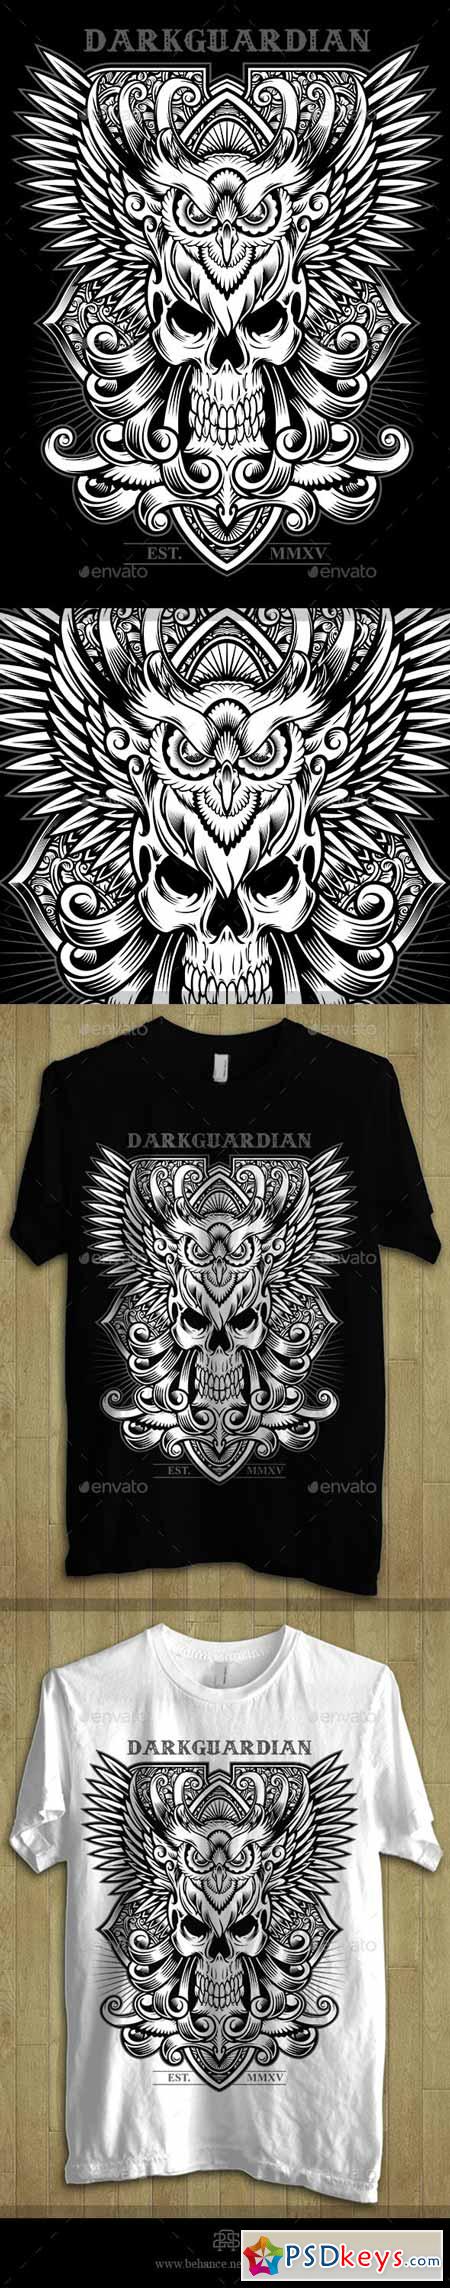 Darkguardian - Skull & Owl Theme Tshirt Design 10949584